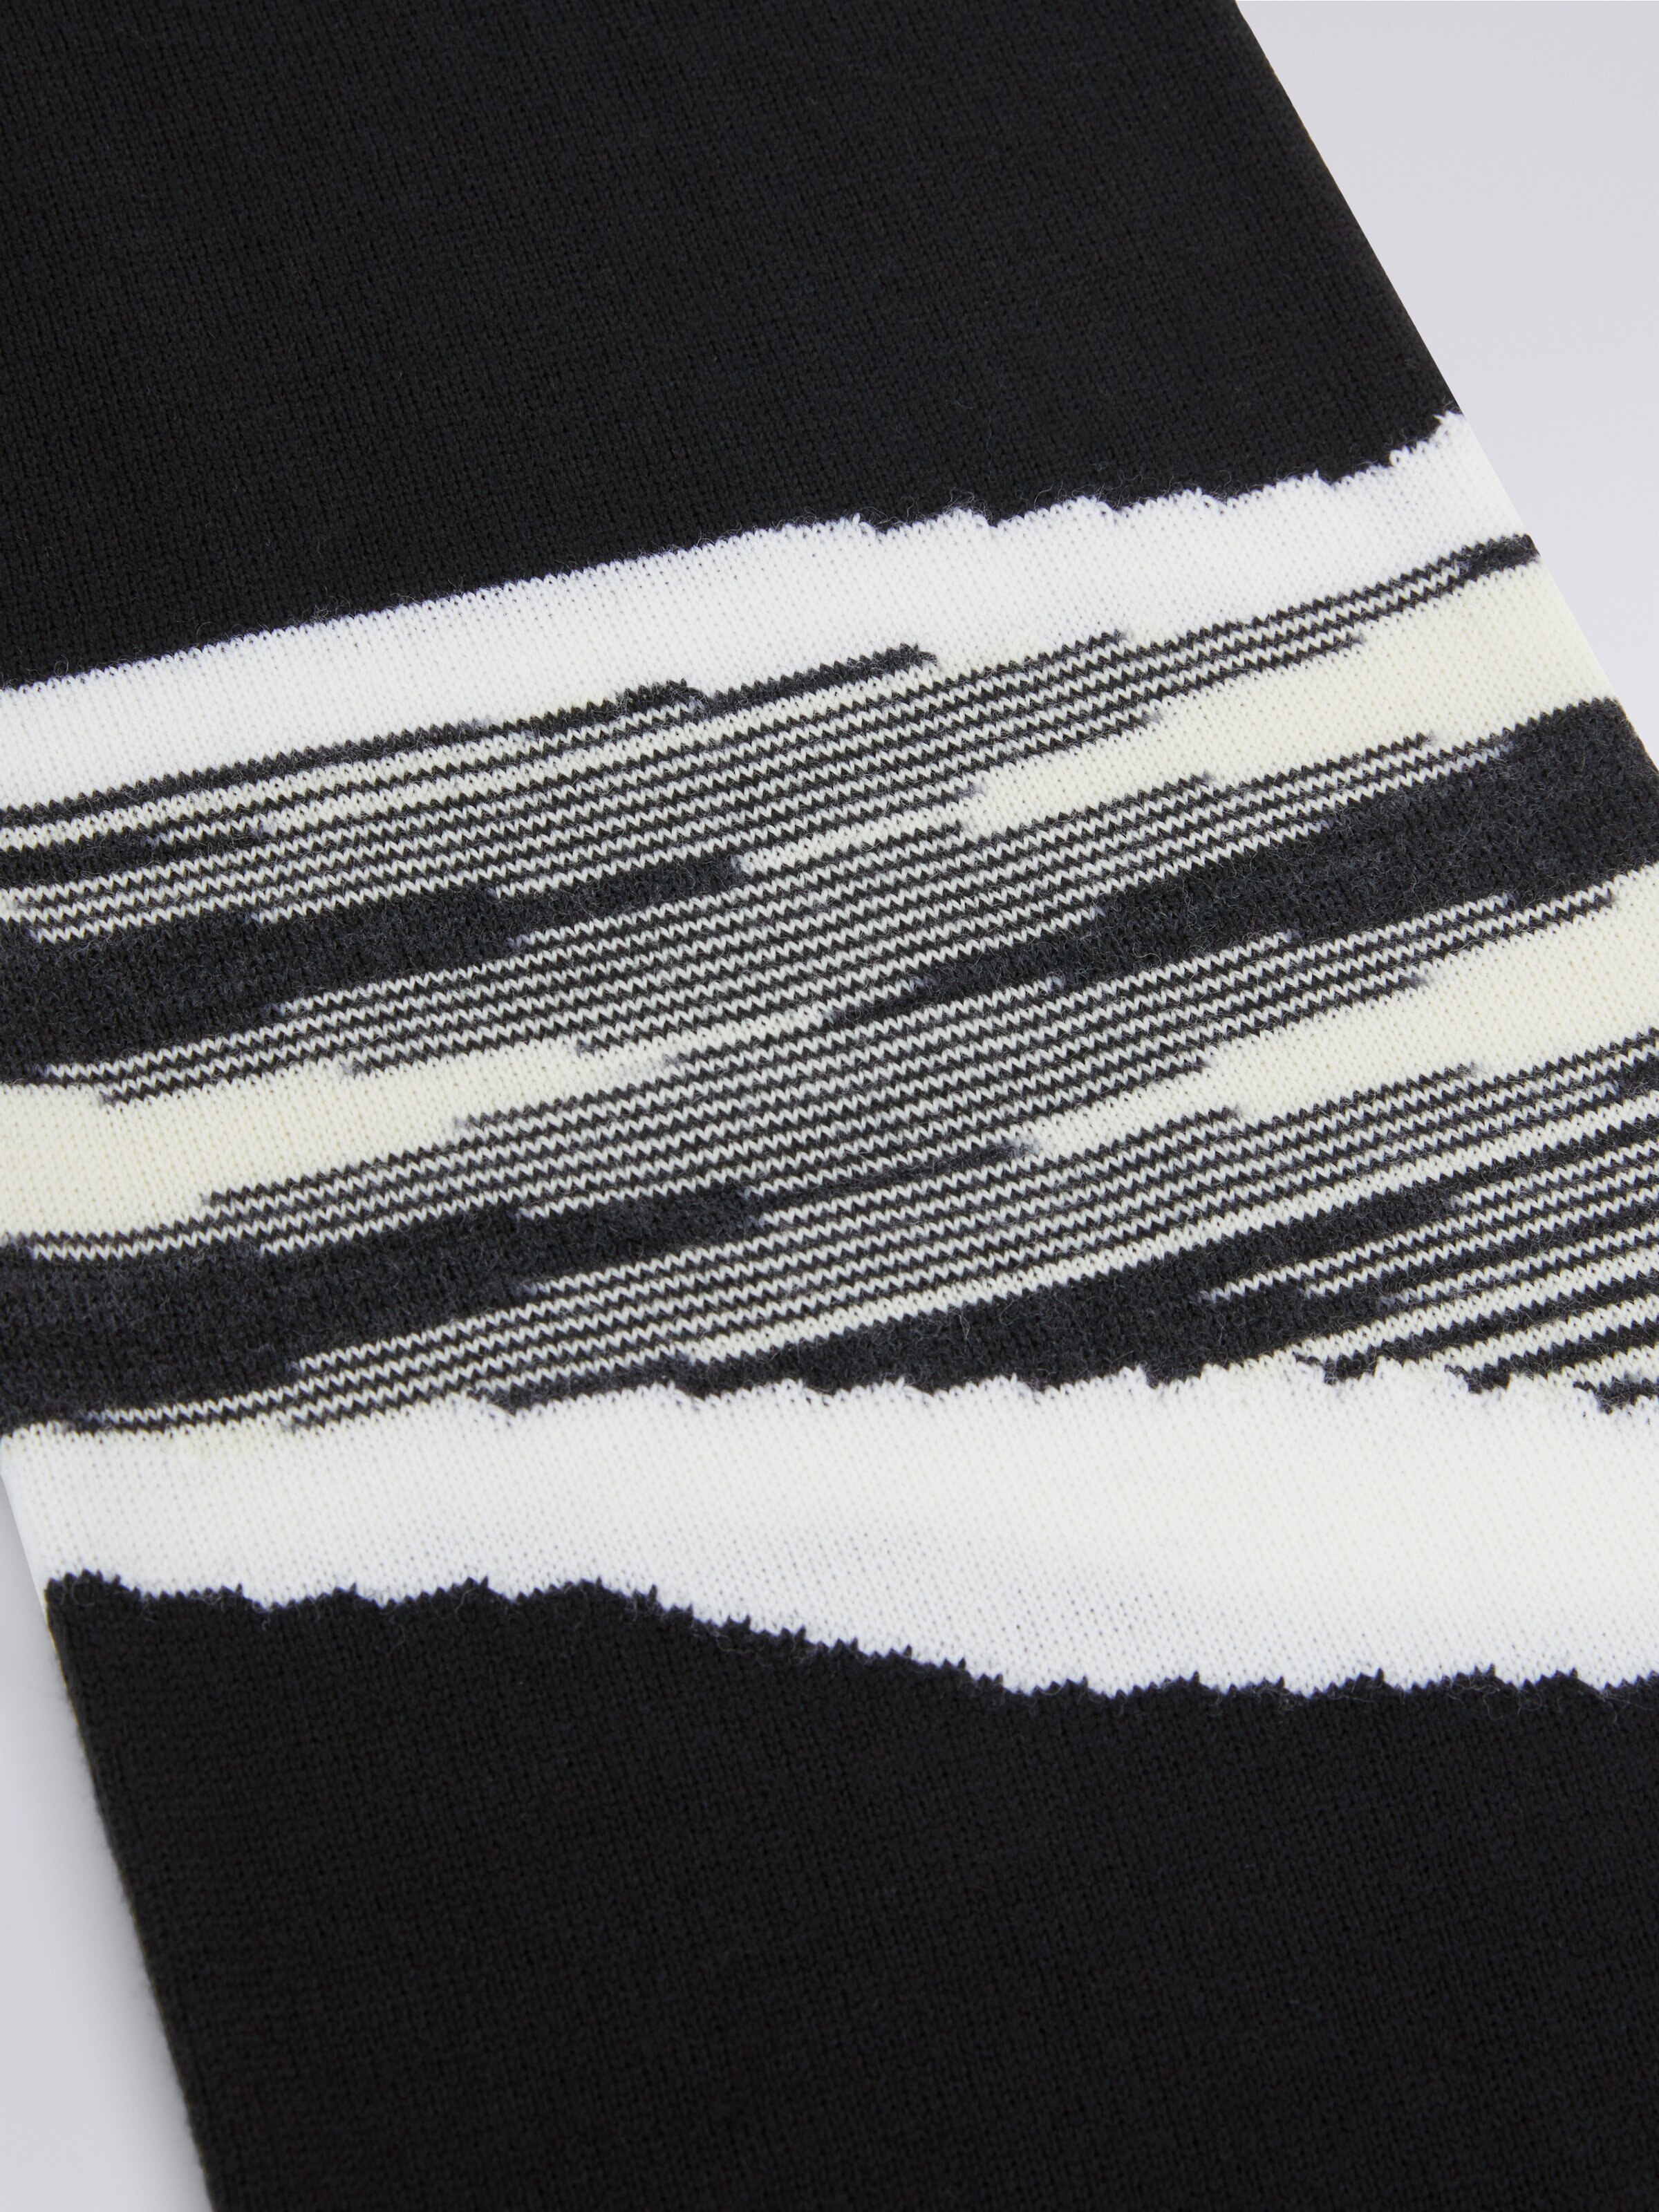 Pure virgin wool trousers, Black & White - 3